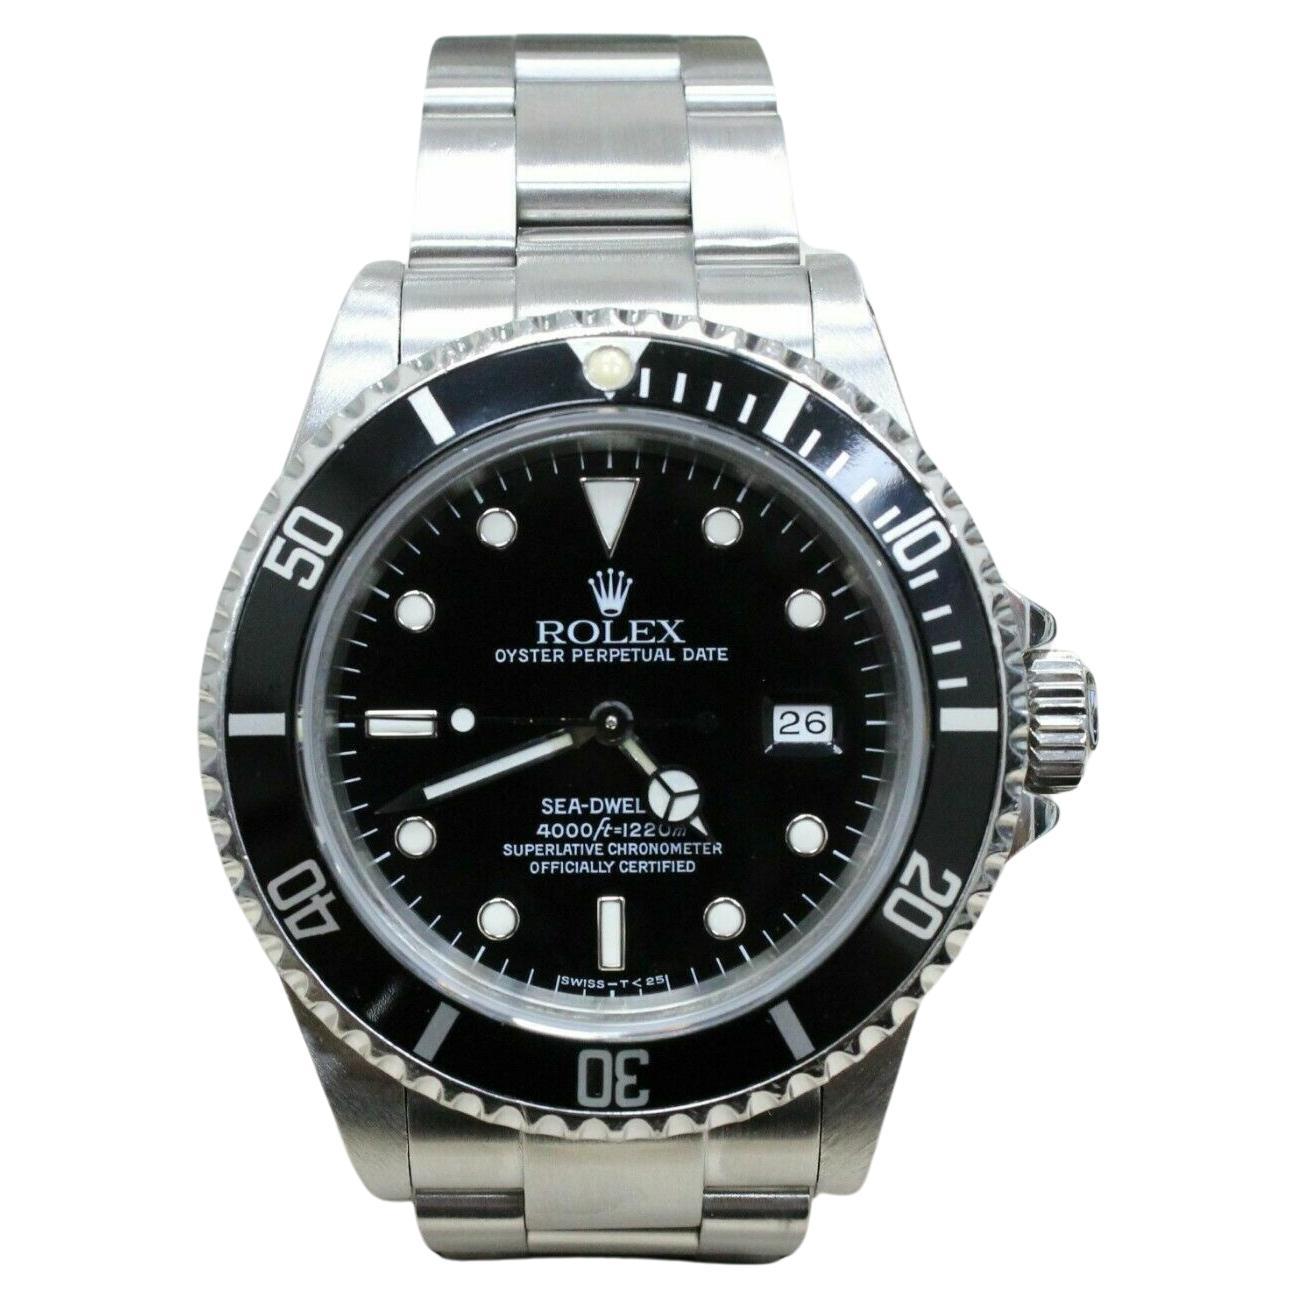 Rolex Sea Dweller 16660 Black Dial Stainless Steel Watch